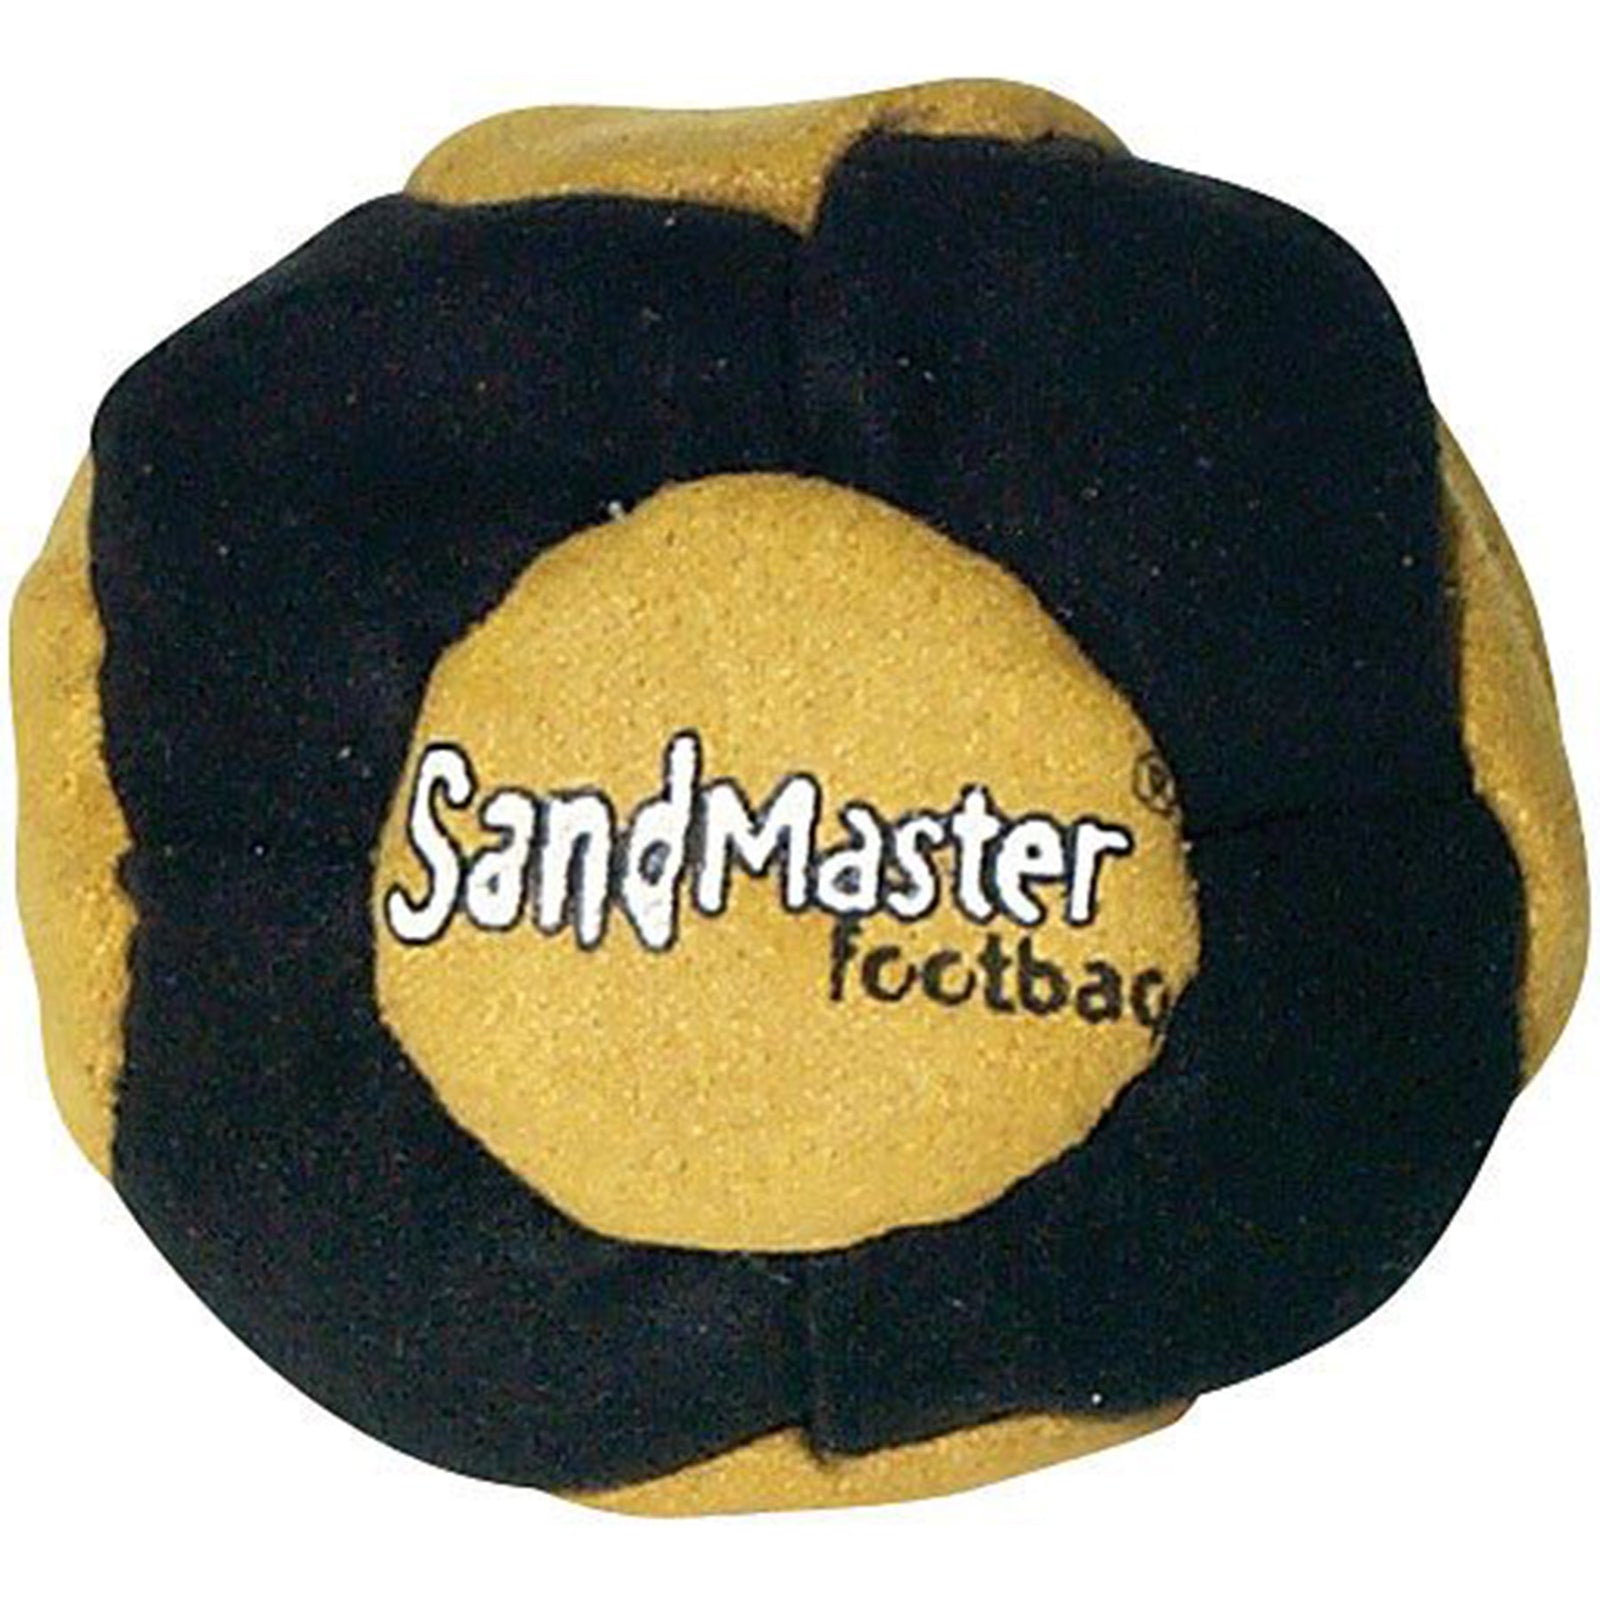 sandmaster 14-panel synthetic suede footbag (hacky sack)